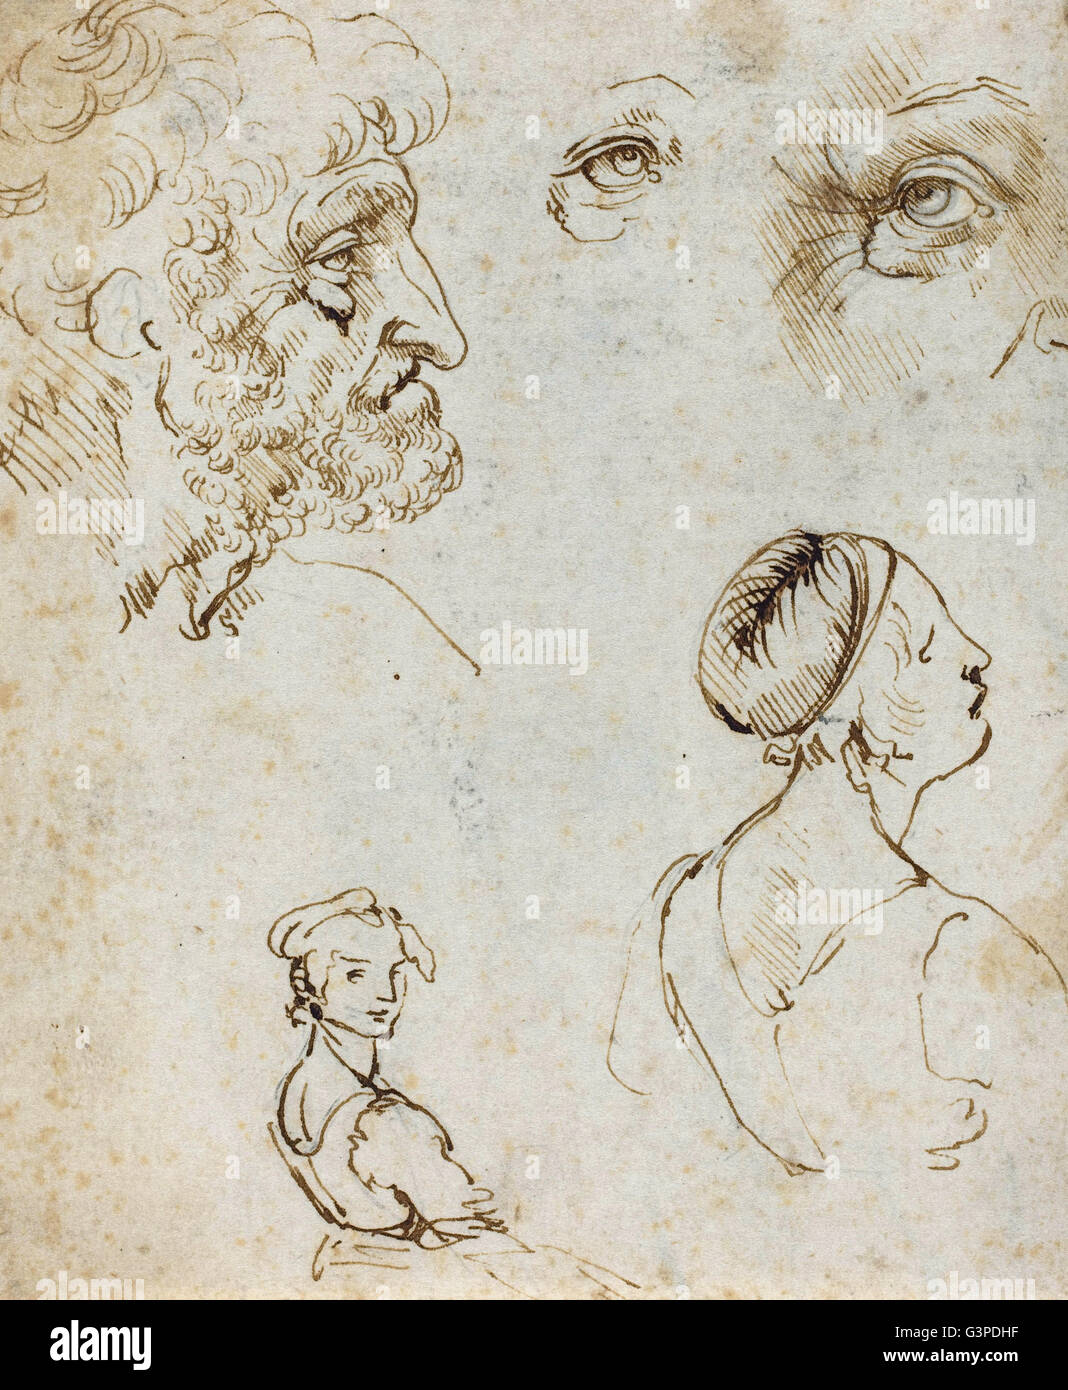 Leonardo da Vinci - Sheet of Studies (Recto) - National Gallery of Art, Washington DC Stockfoto